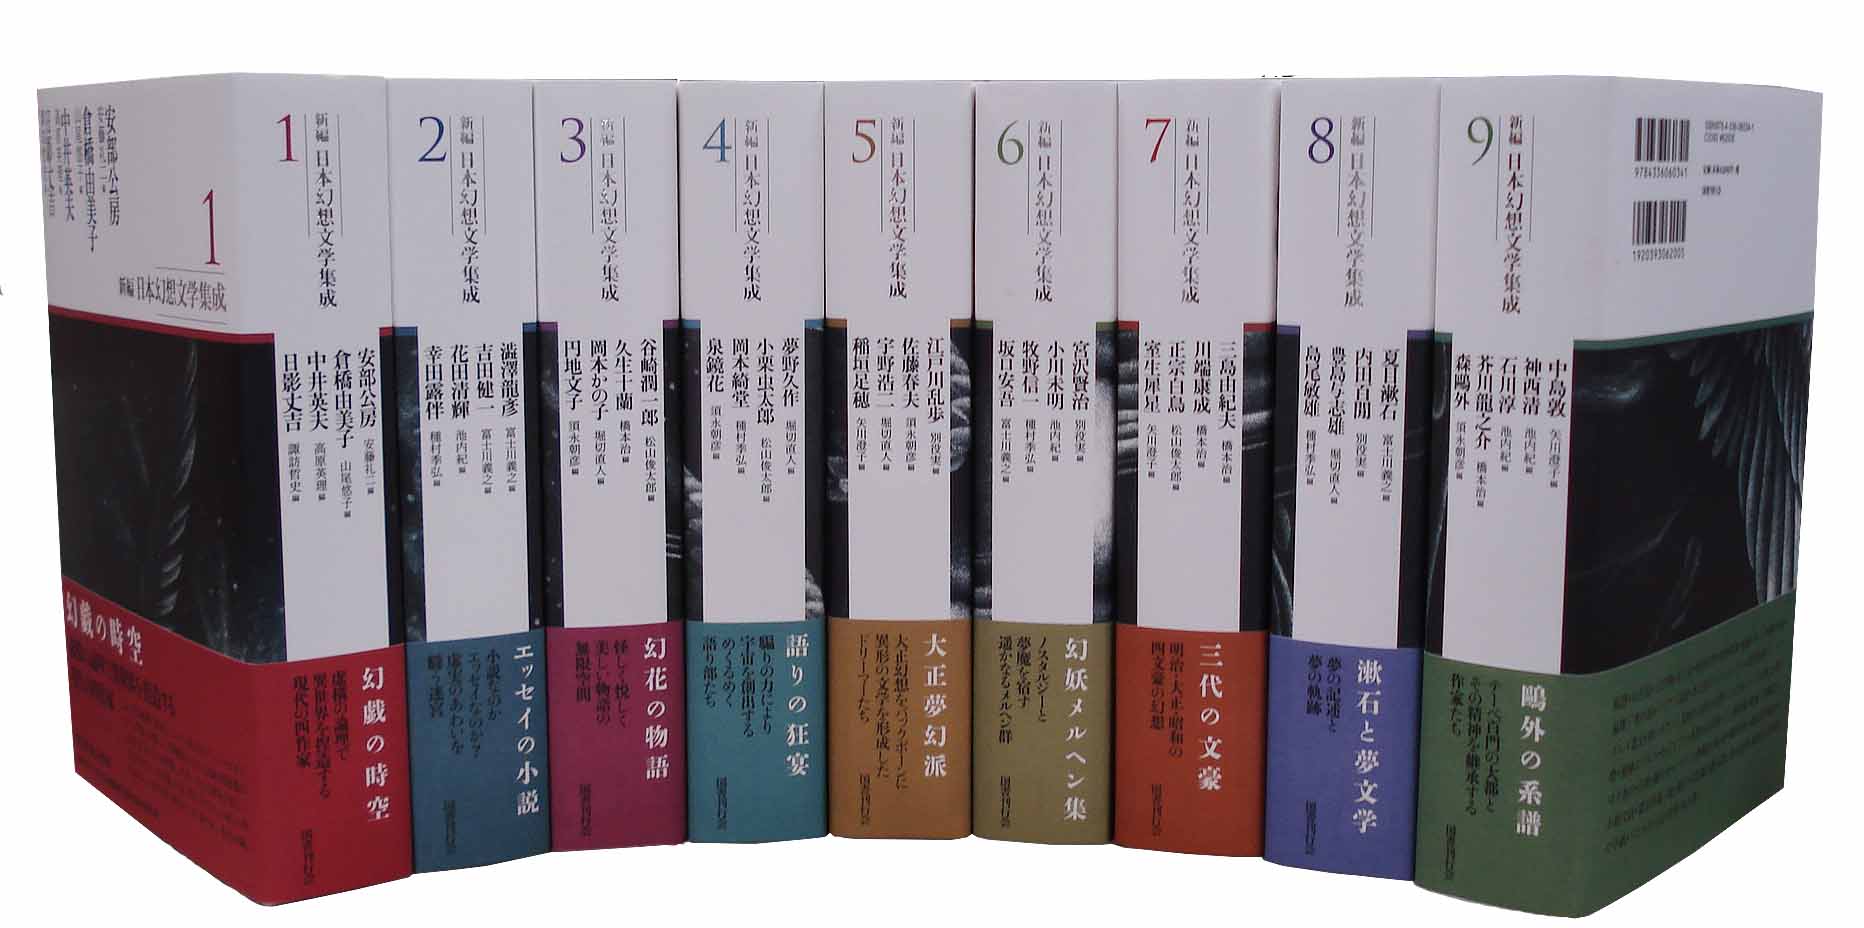 新編・日本幻想文学集成 1、2 おまとめ - 文学/小説